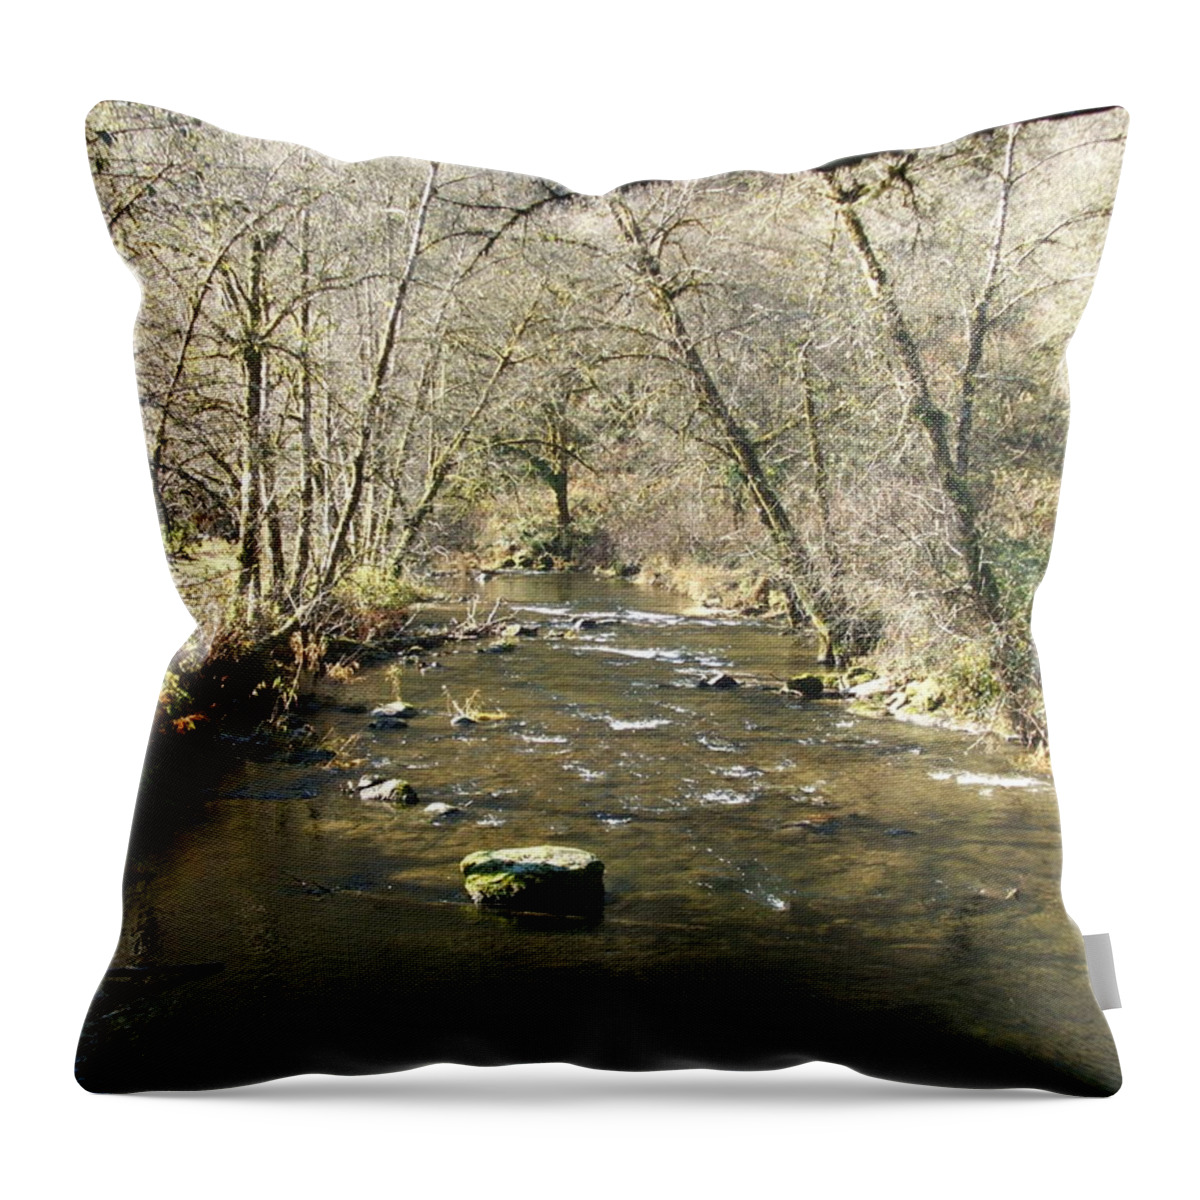 River Throw Pillow featuring the photograph Sleepy Creek by Shari Chavira